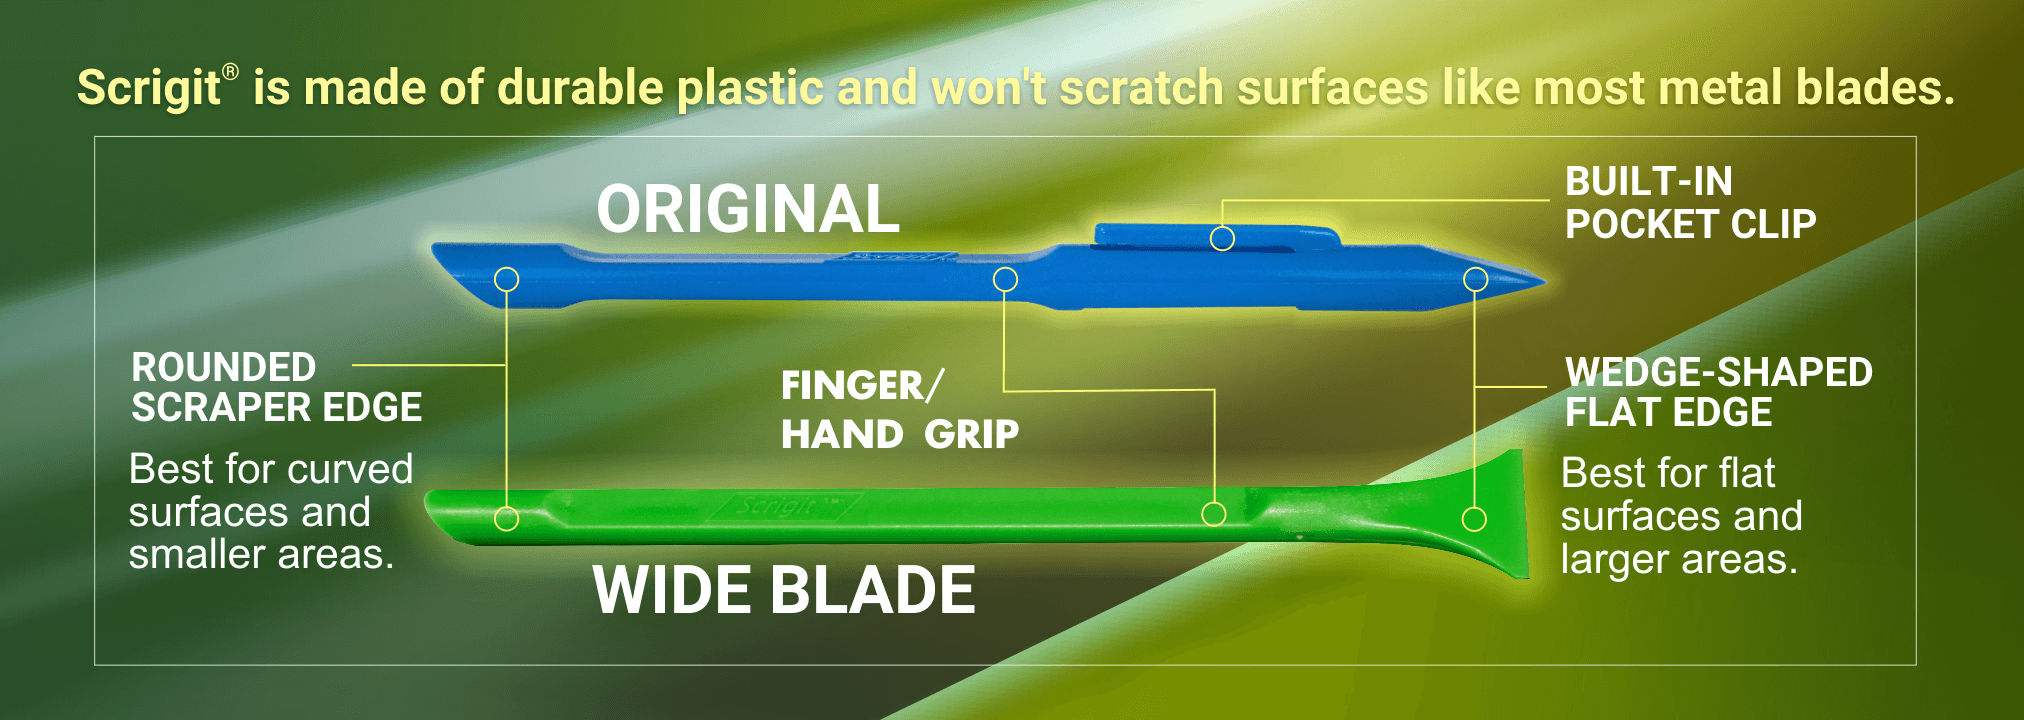 Scrigit won't scrach surfaces like most metal blades